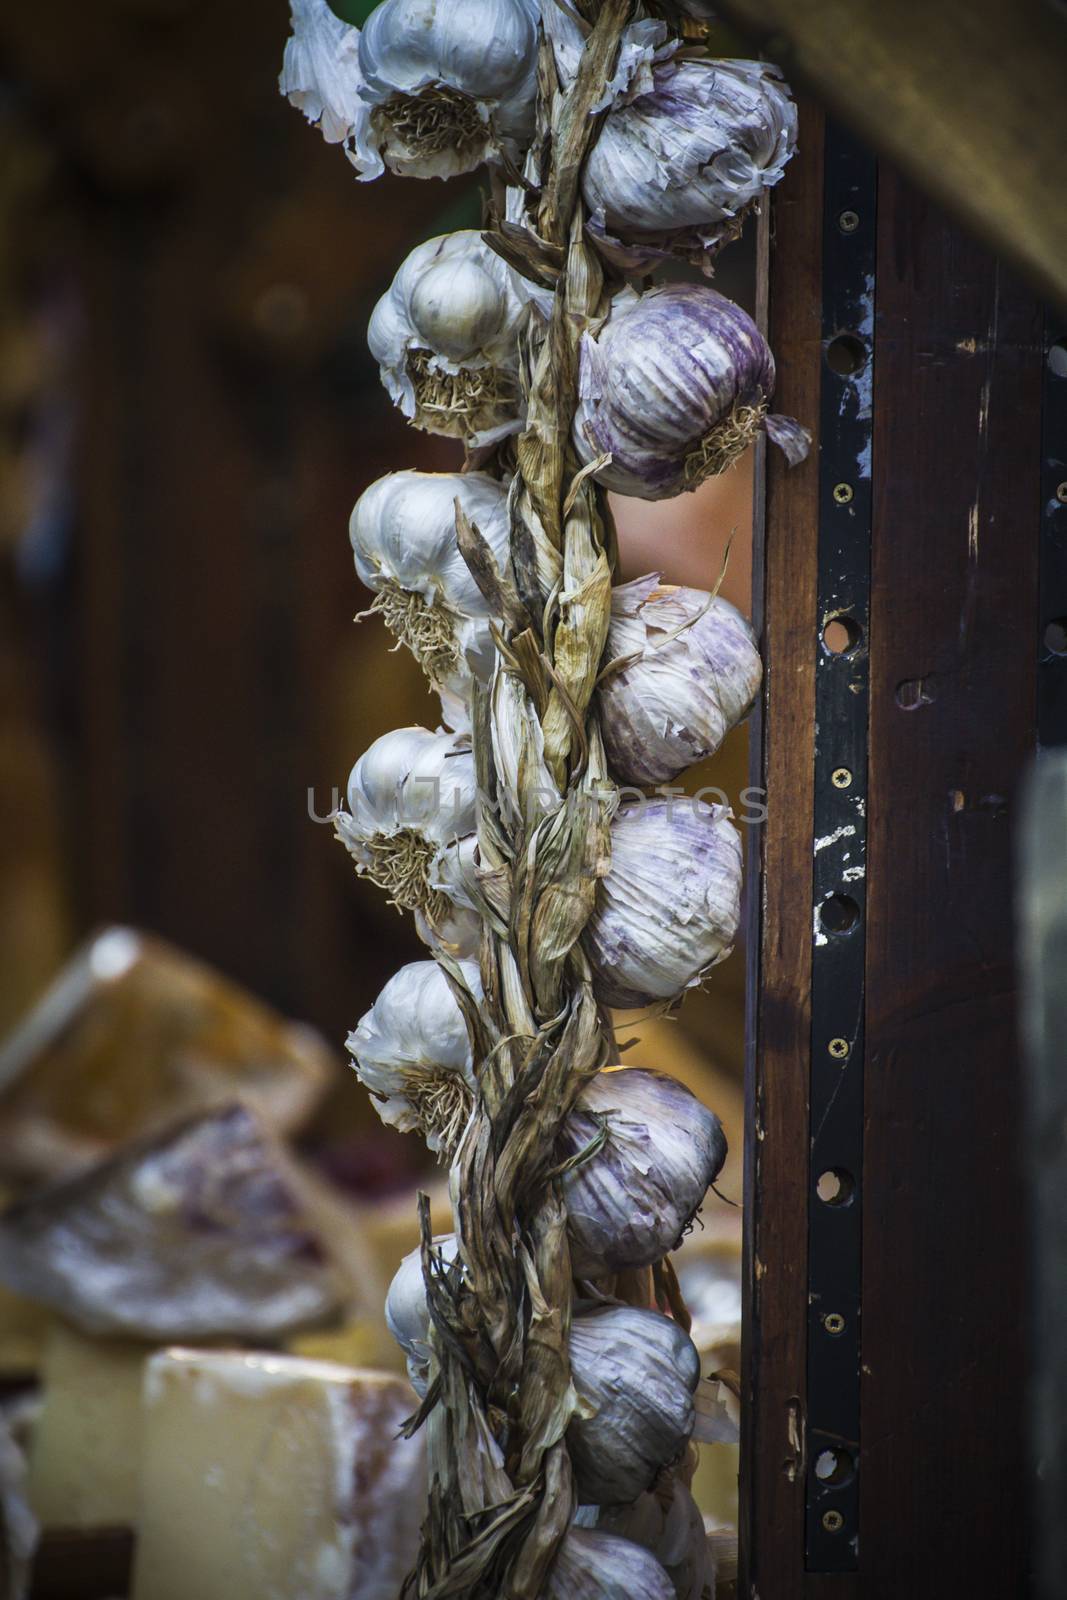 lot of garlic in a medieval fair, kitchen condiments by FernandoCortes